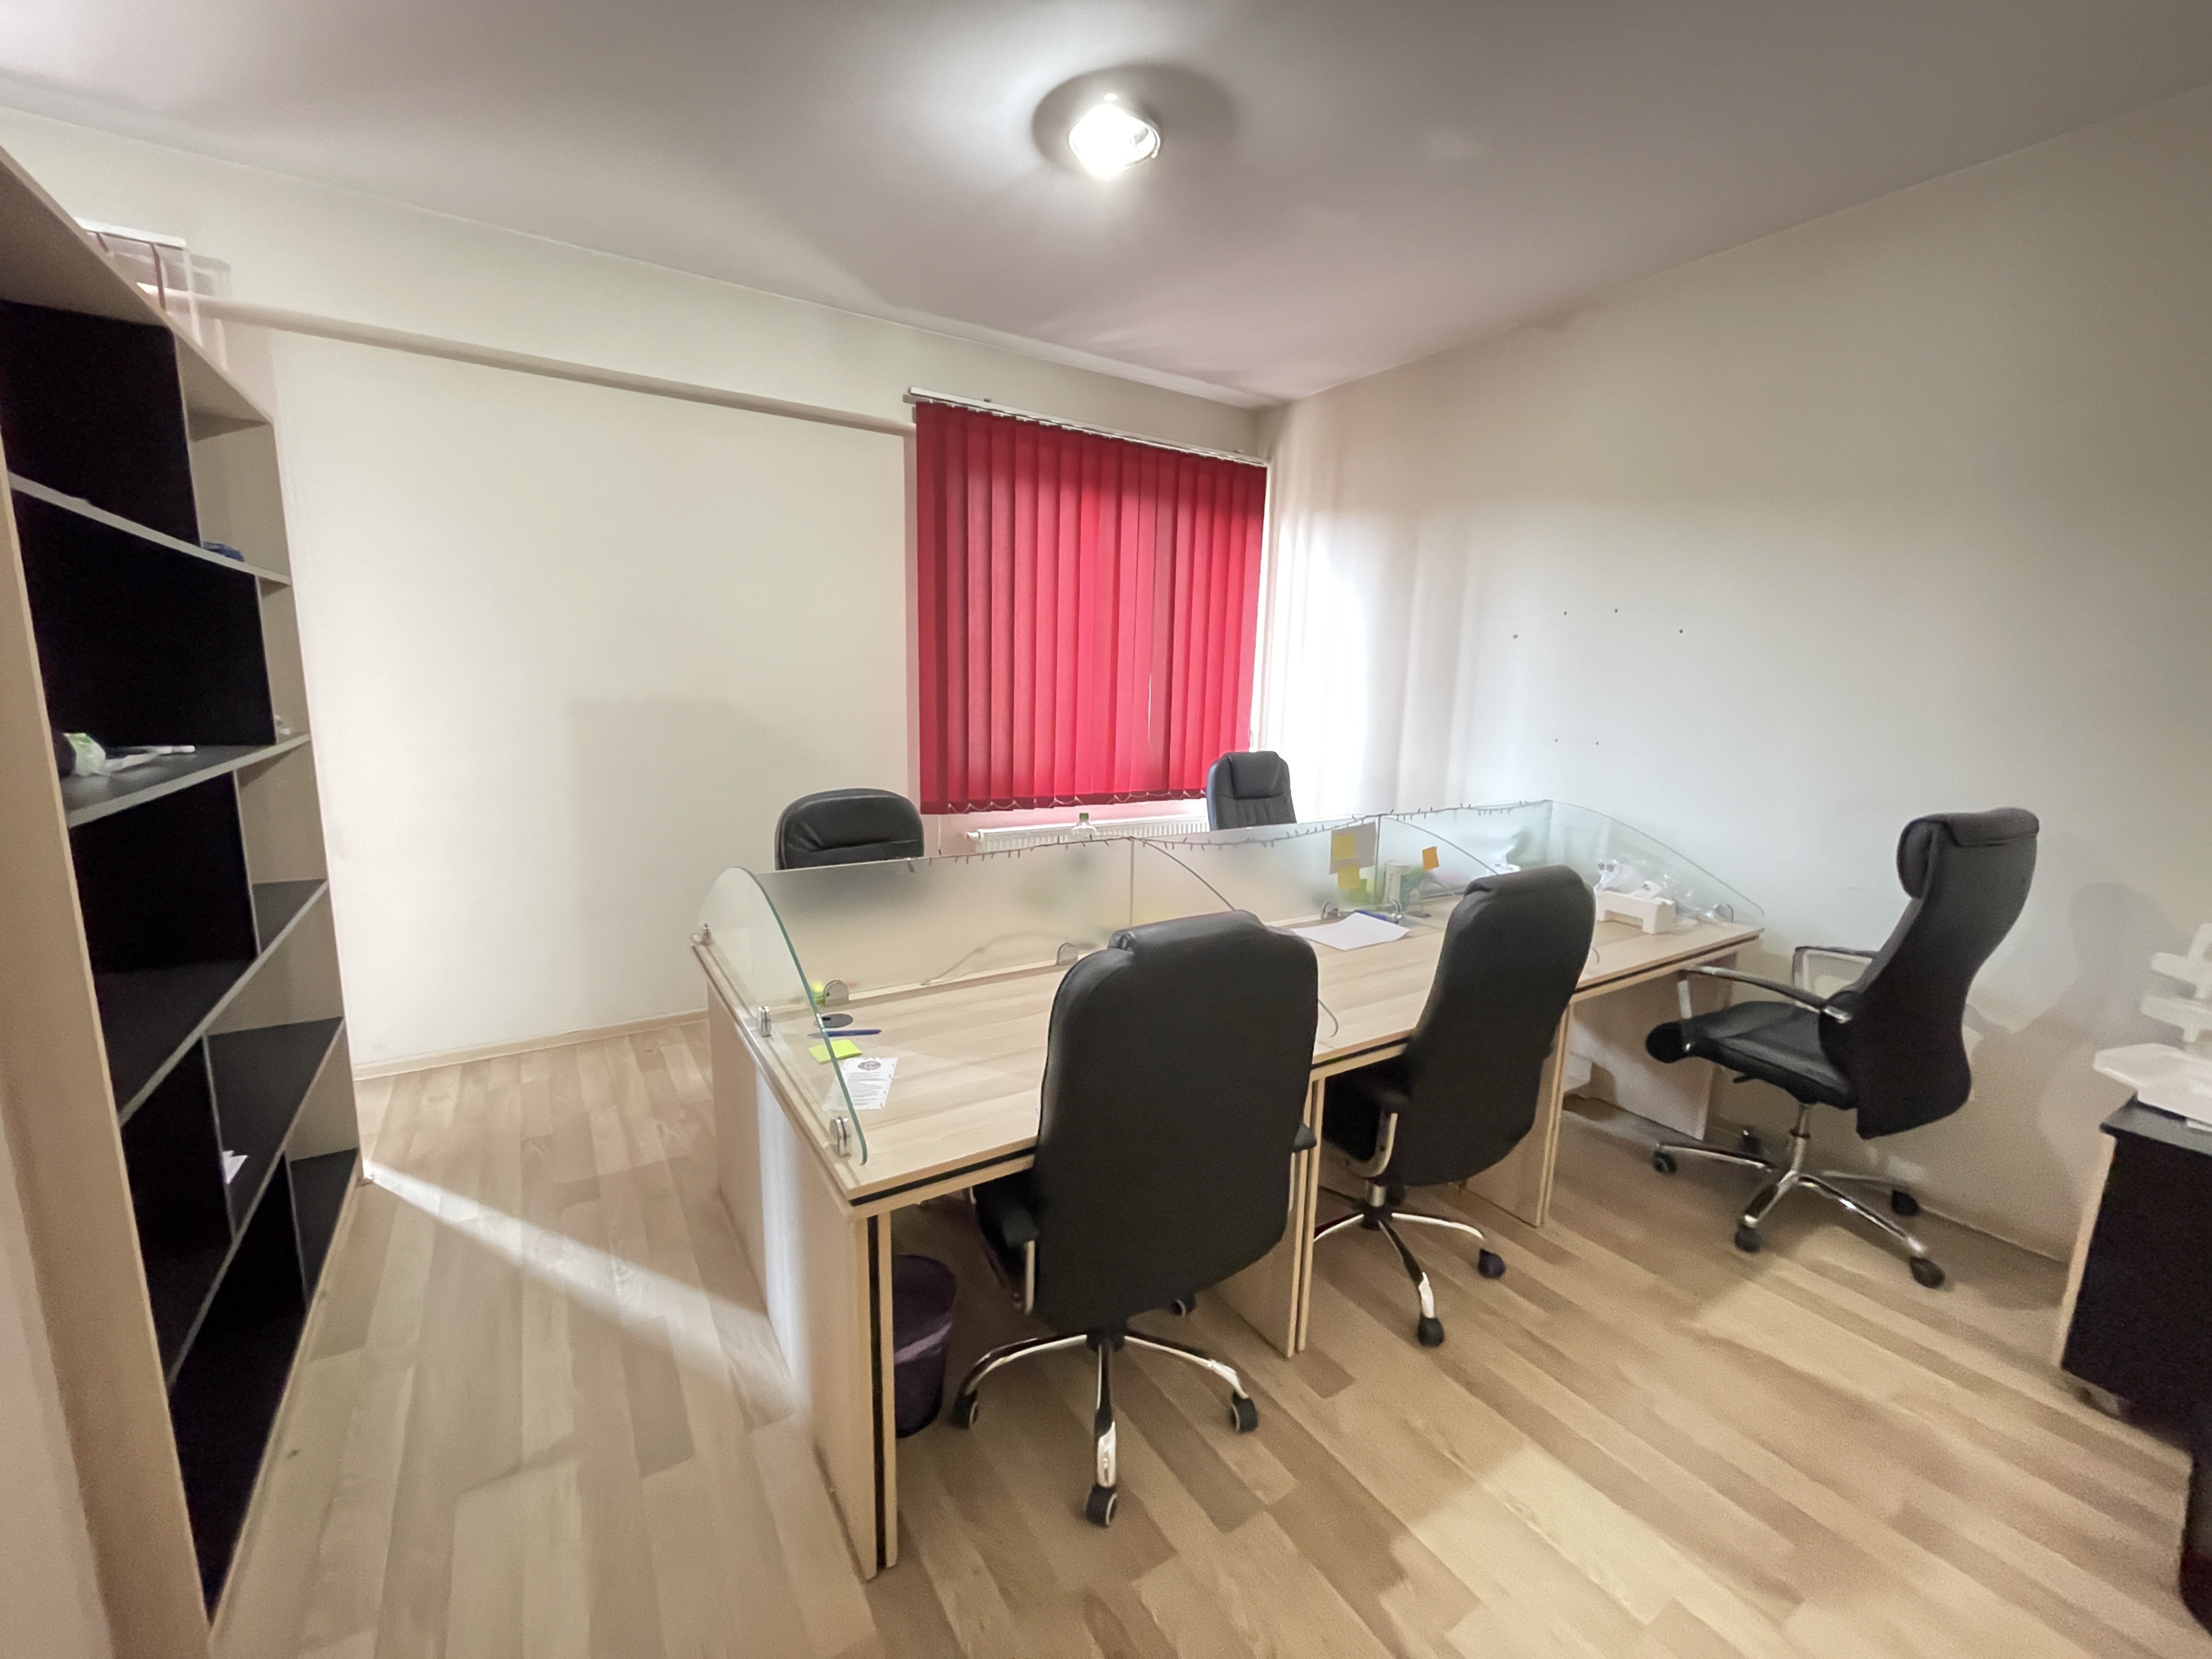 2-Room Office For Rent in “M2 Hippodrome”